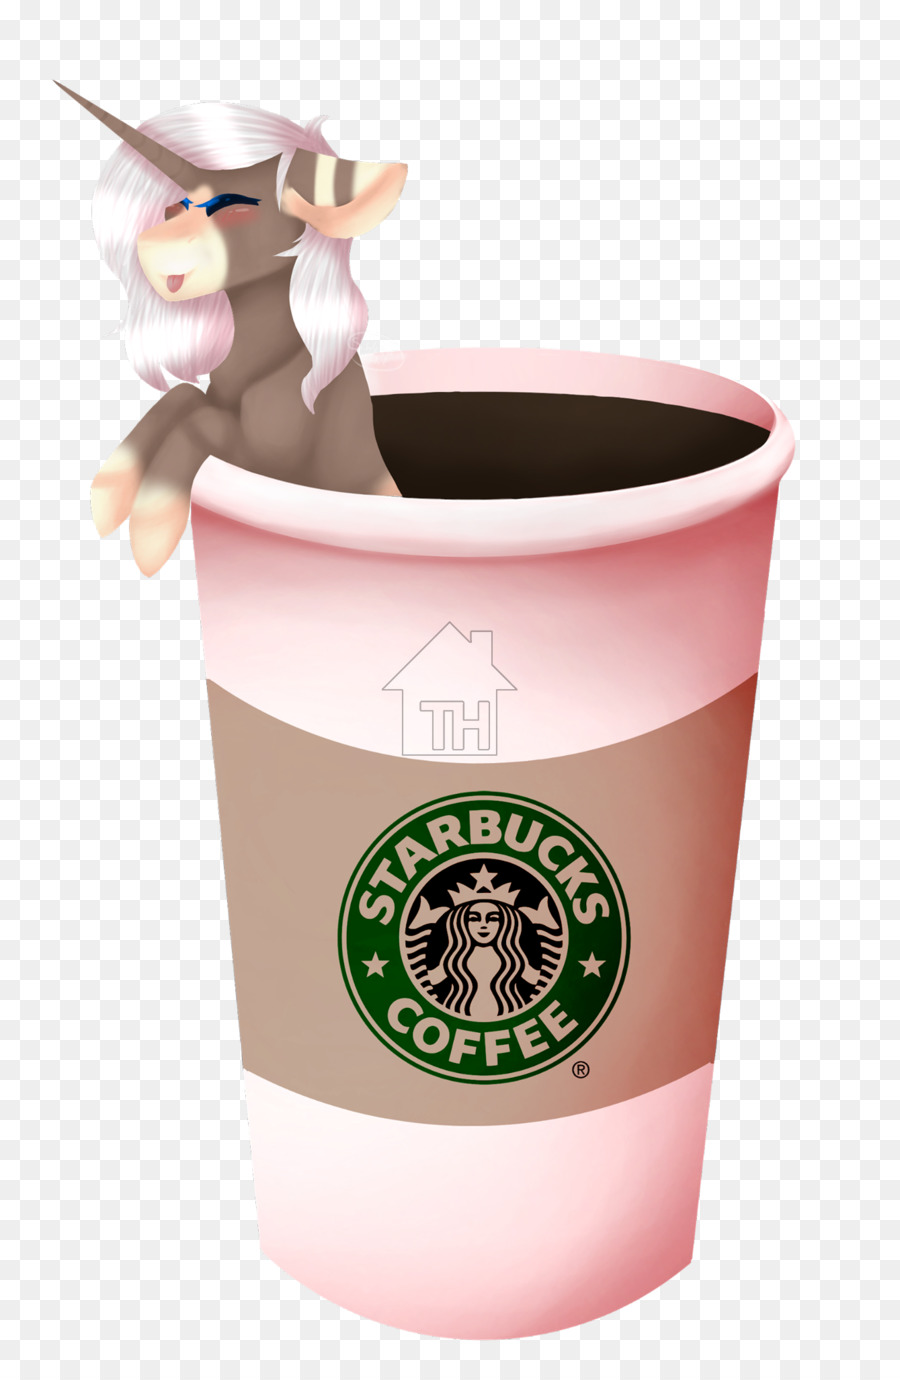 Starbucks Cup Background